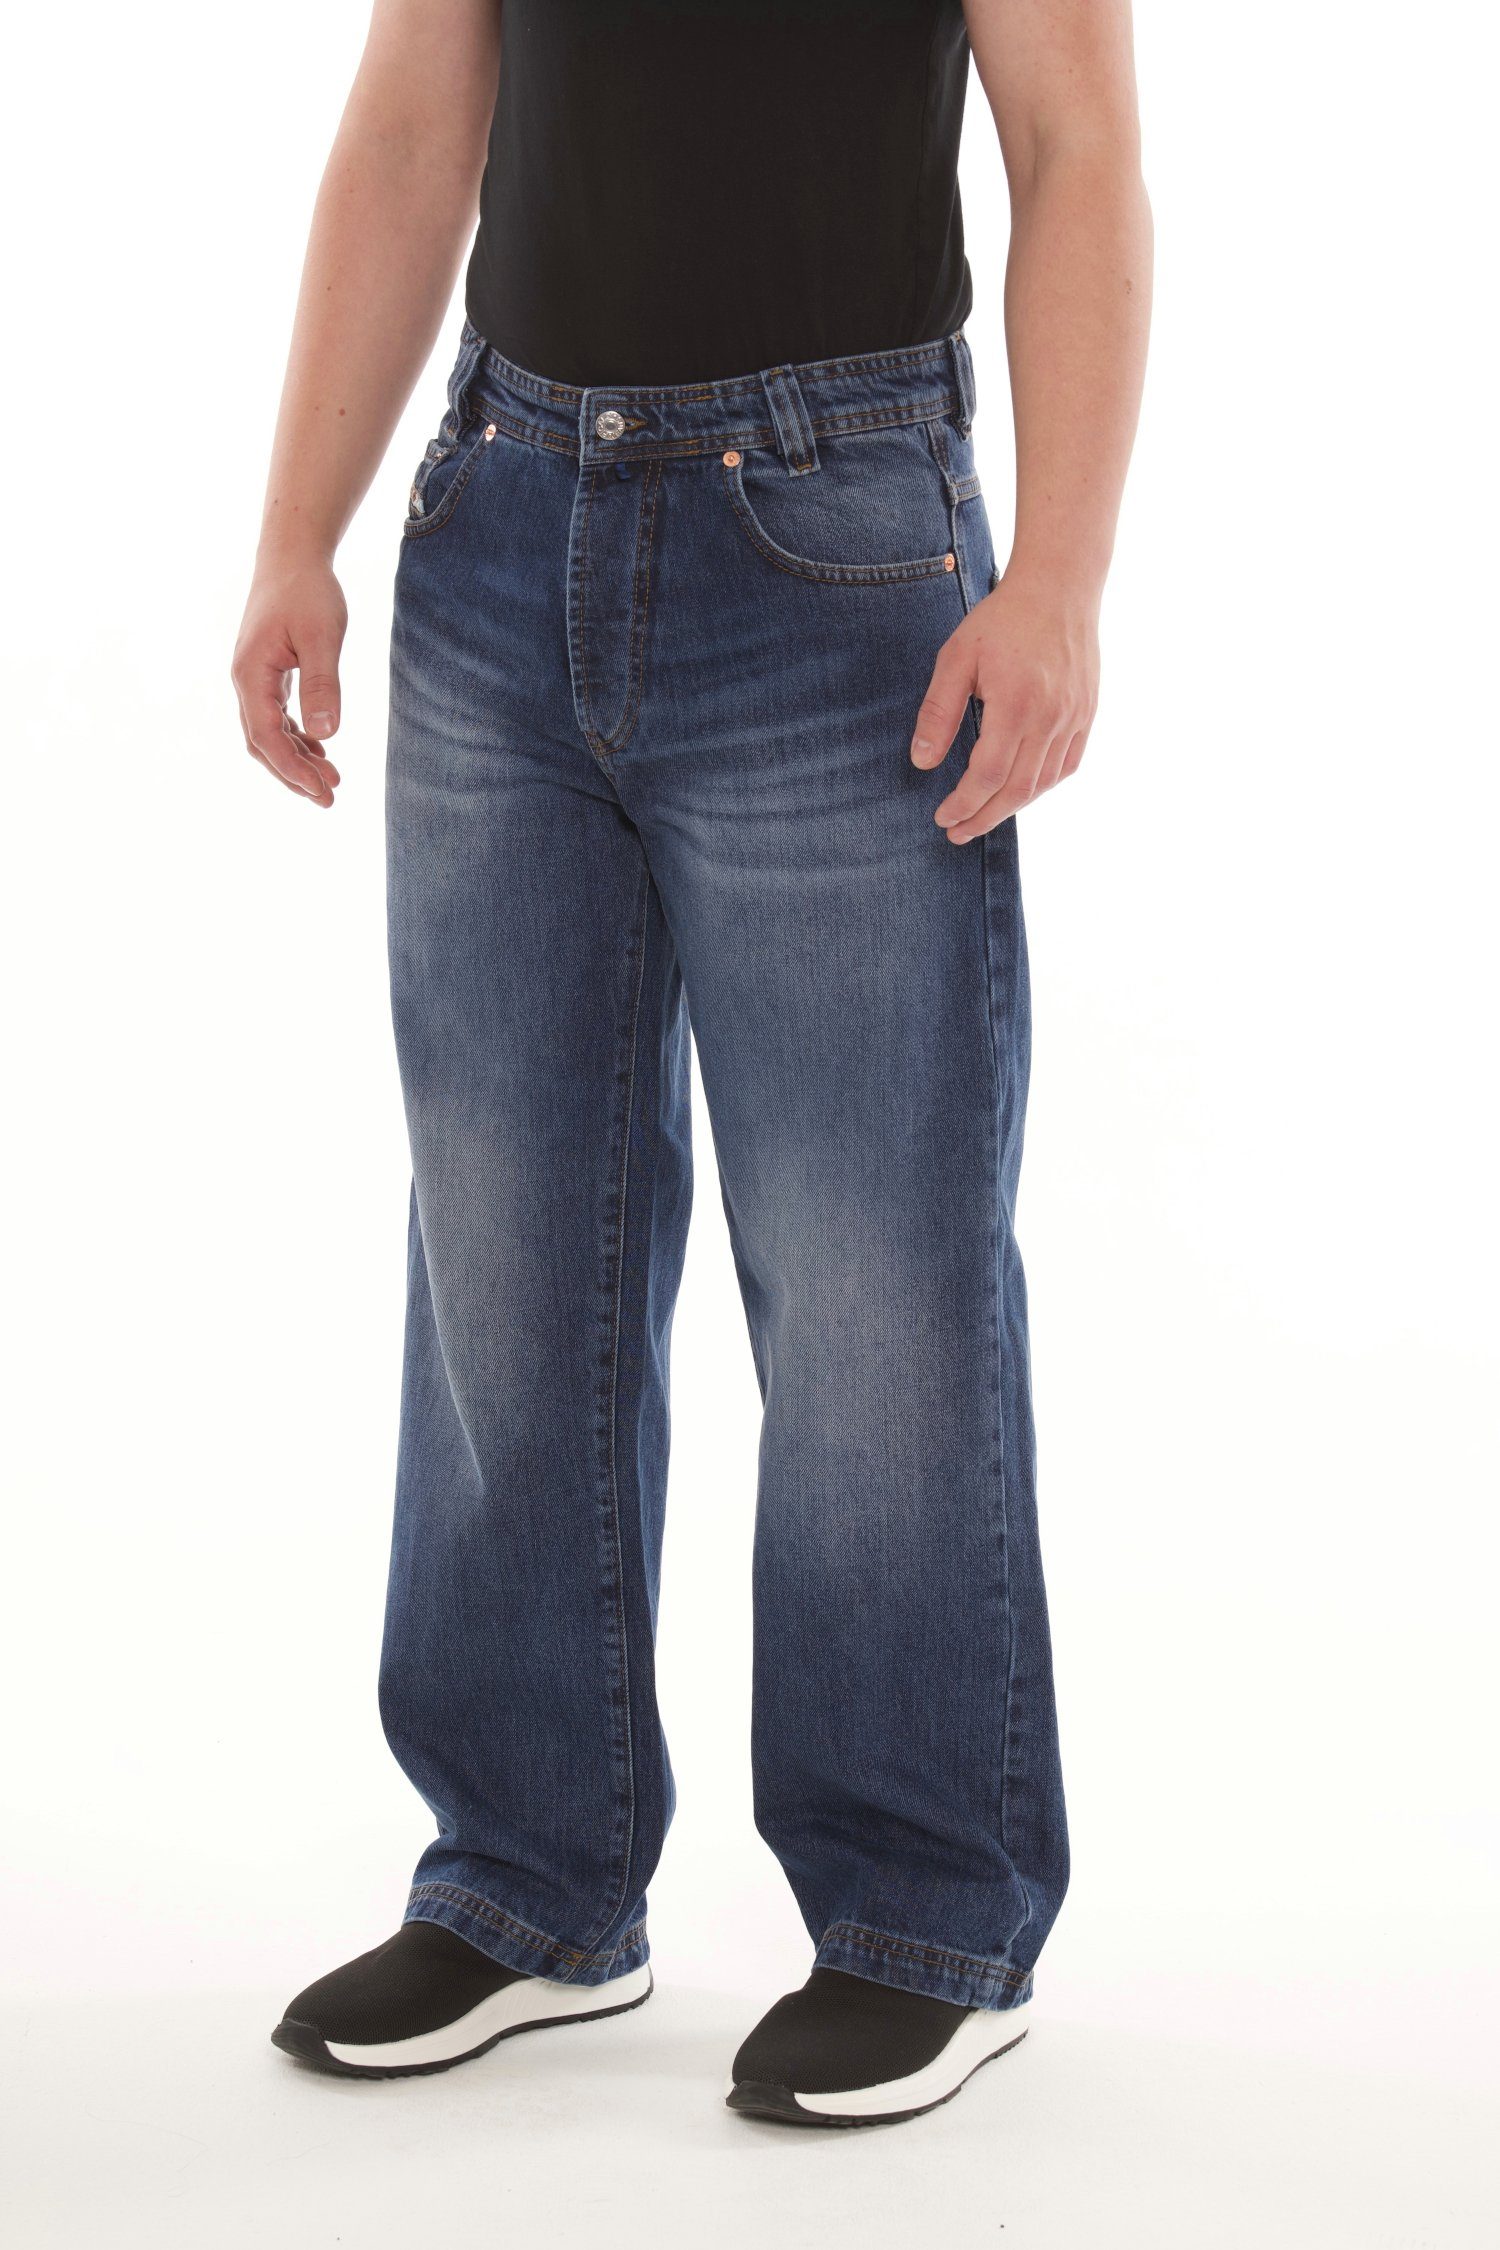 PICALDI Jeans Jeans Fit, Straight Tindery Weite lässiger 474 Leg, Baggy Zicco Schnitt Gerader